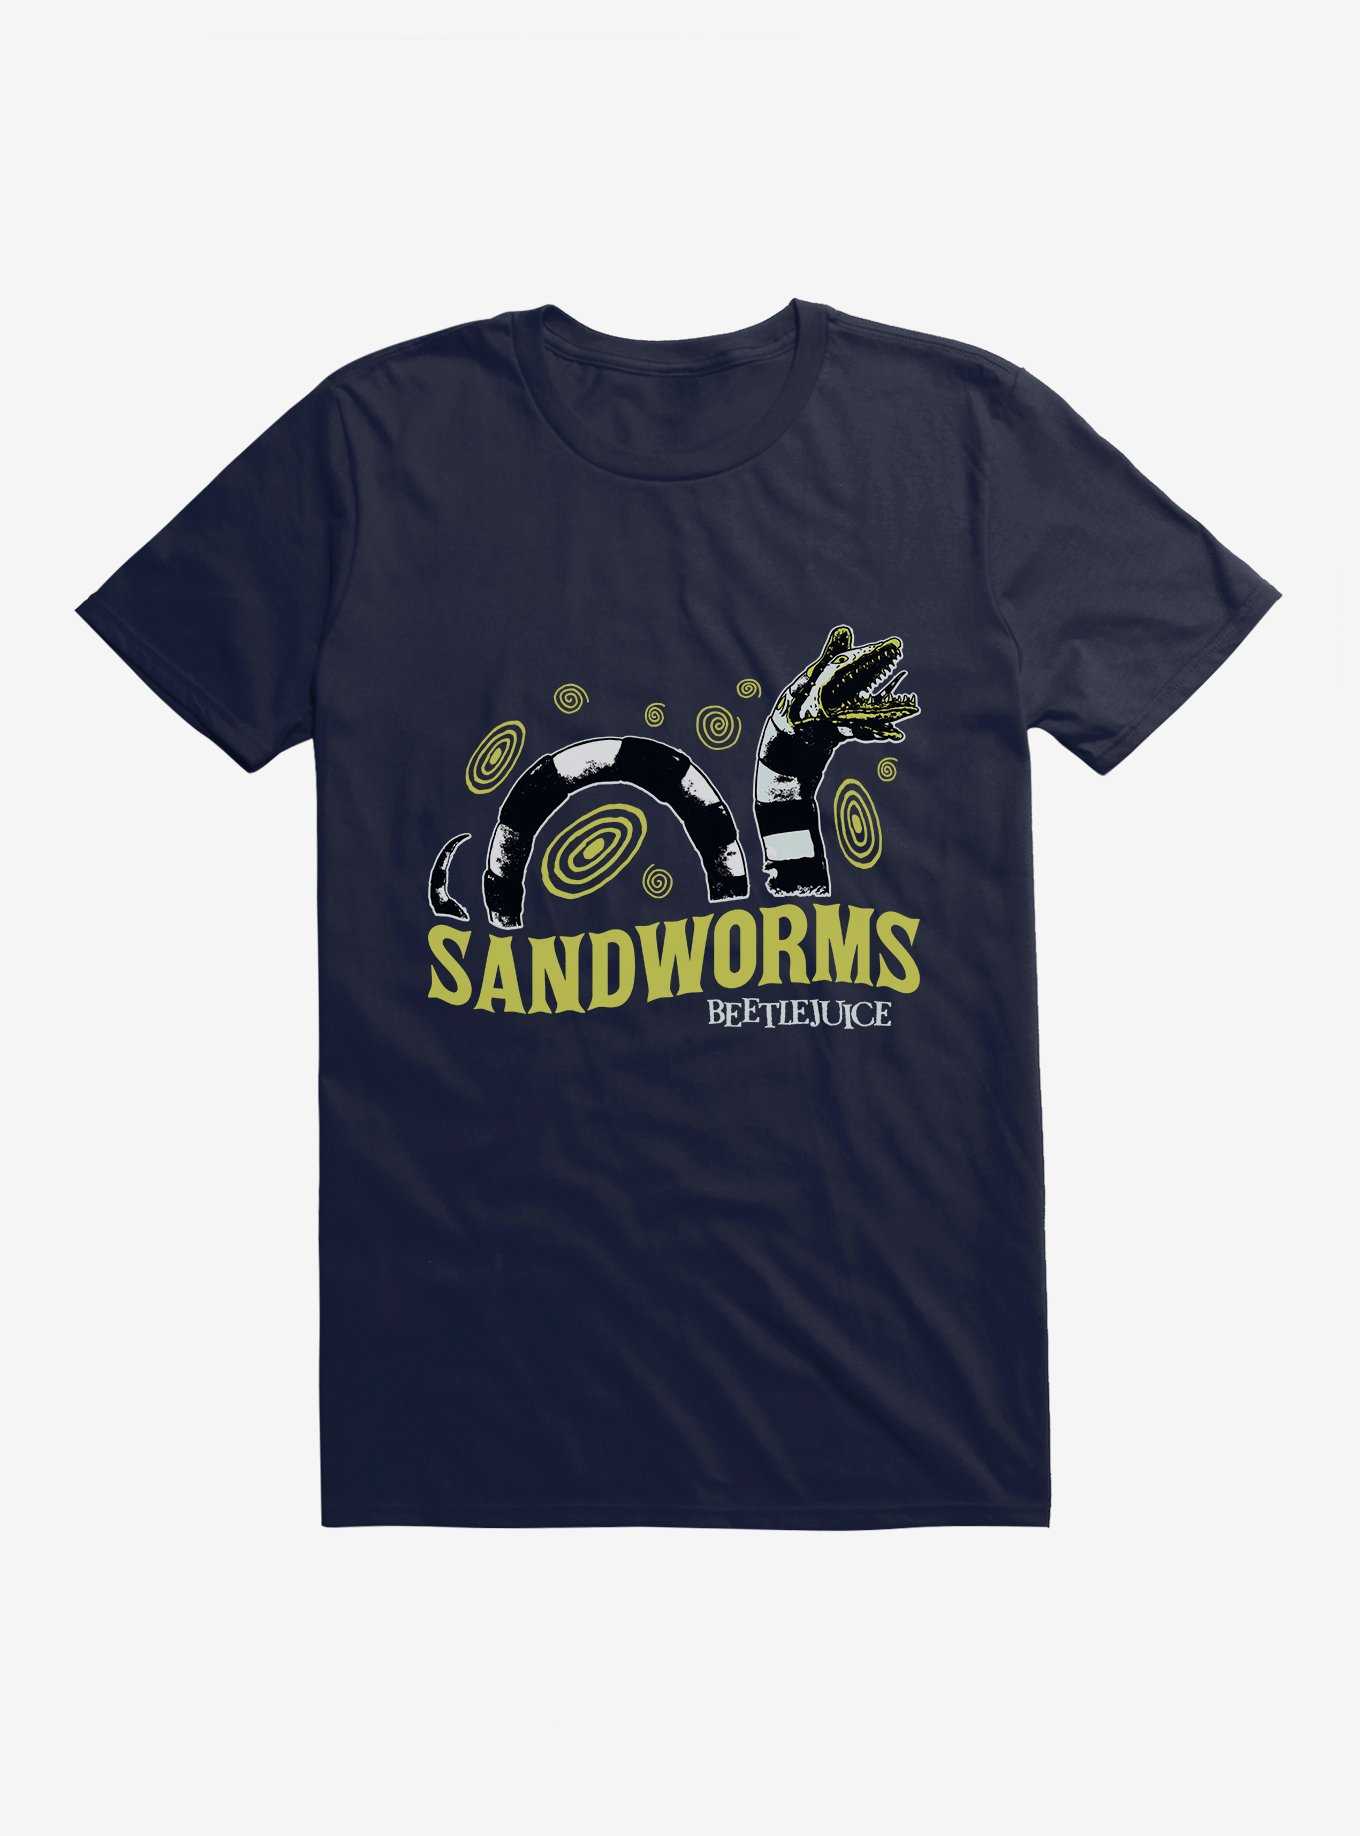 Beetlejuice Sandworms T-Shirt, , hi-res